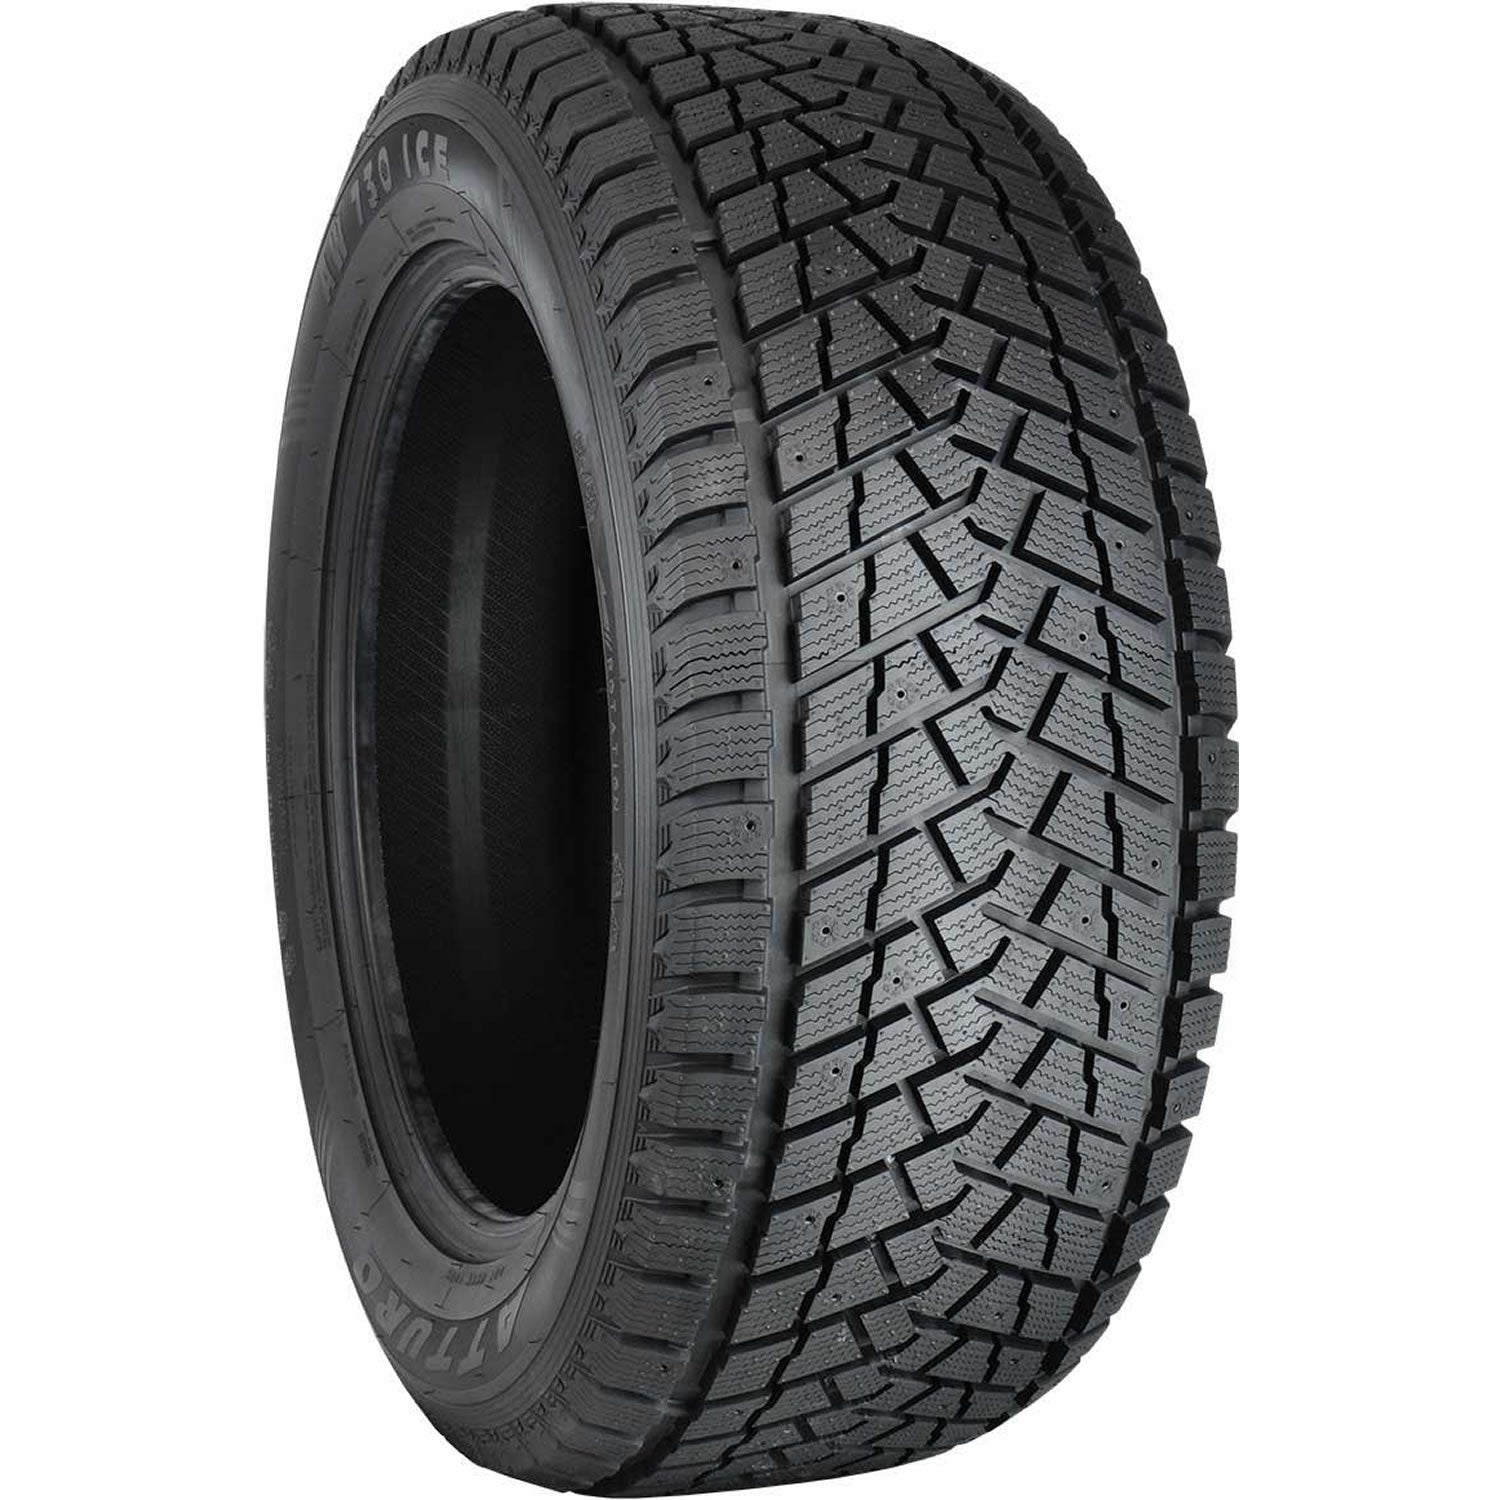 ATTURO AW730 ICE 255/55R18 (29.1X10.5R 18) Tires